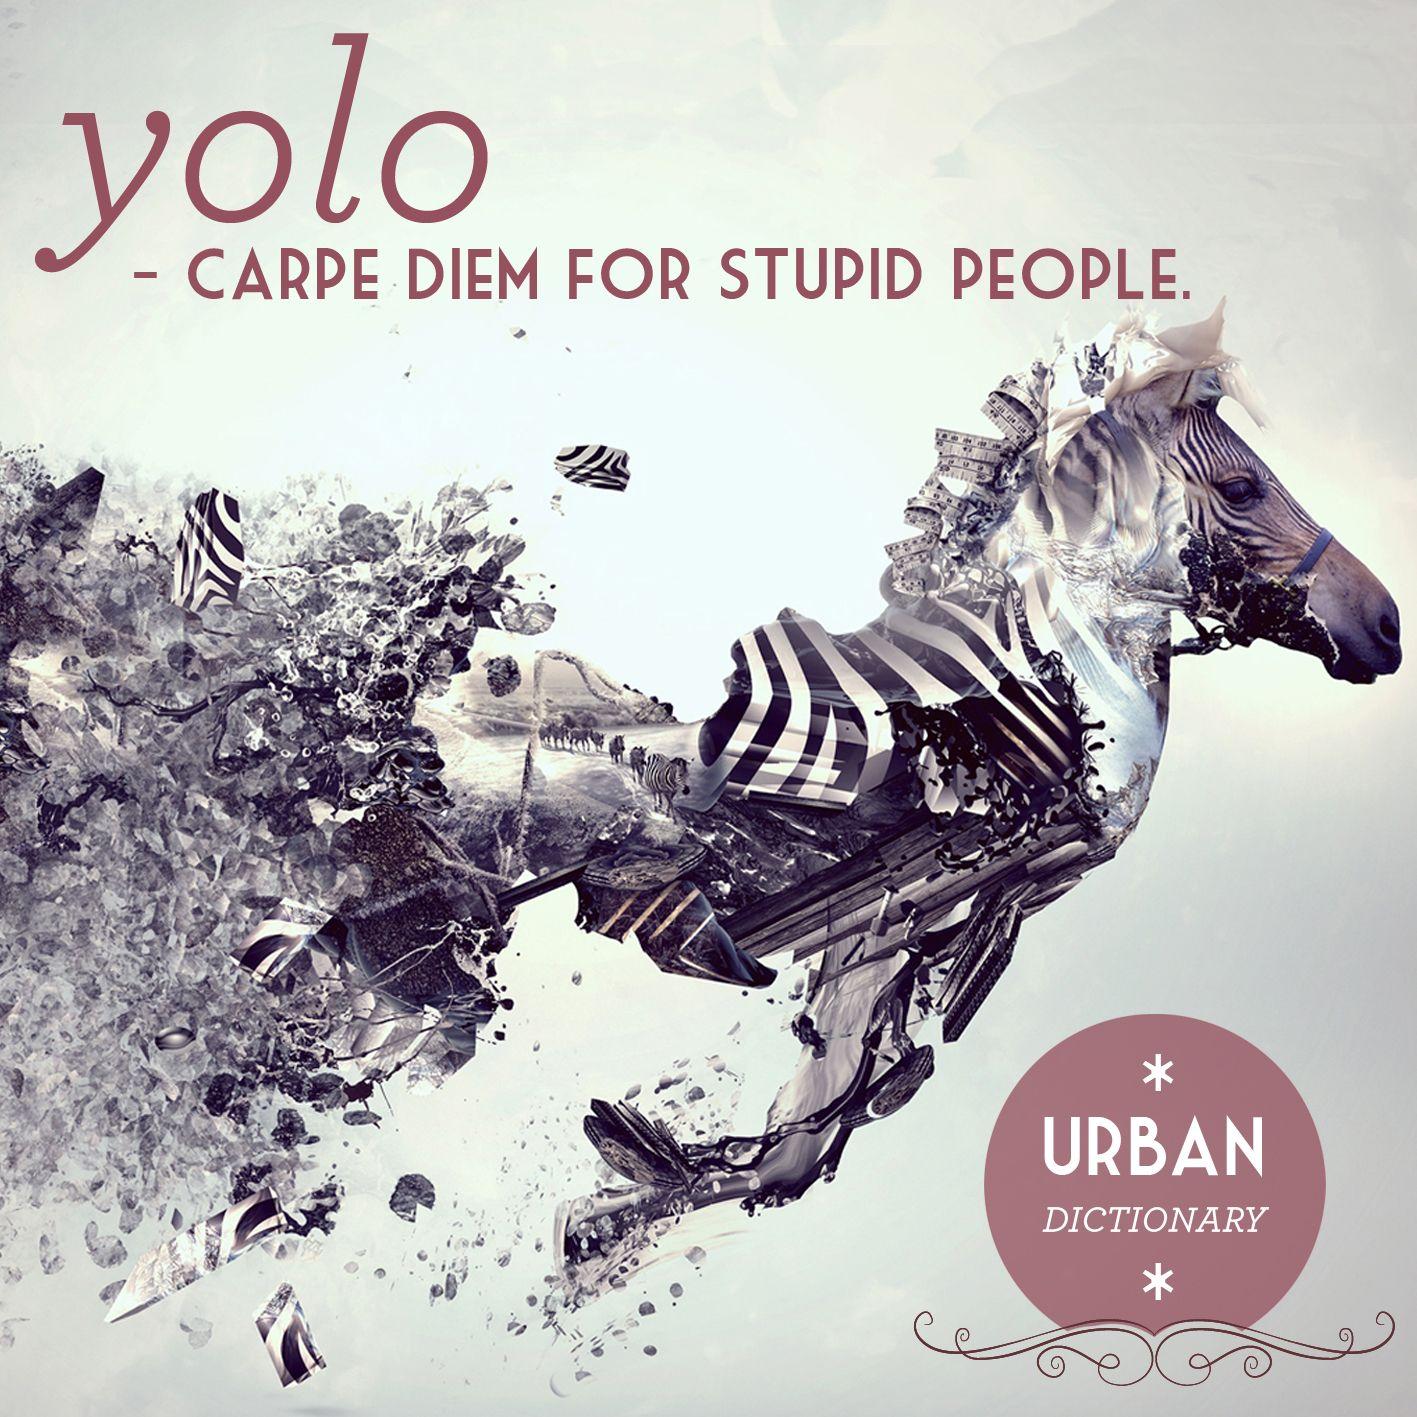 yolo #urban #dictionary #meaning #funny. Urban Dictionary